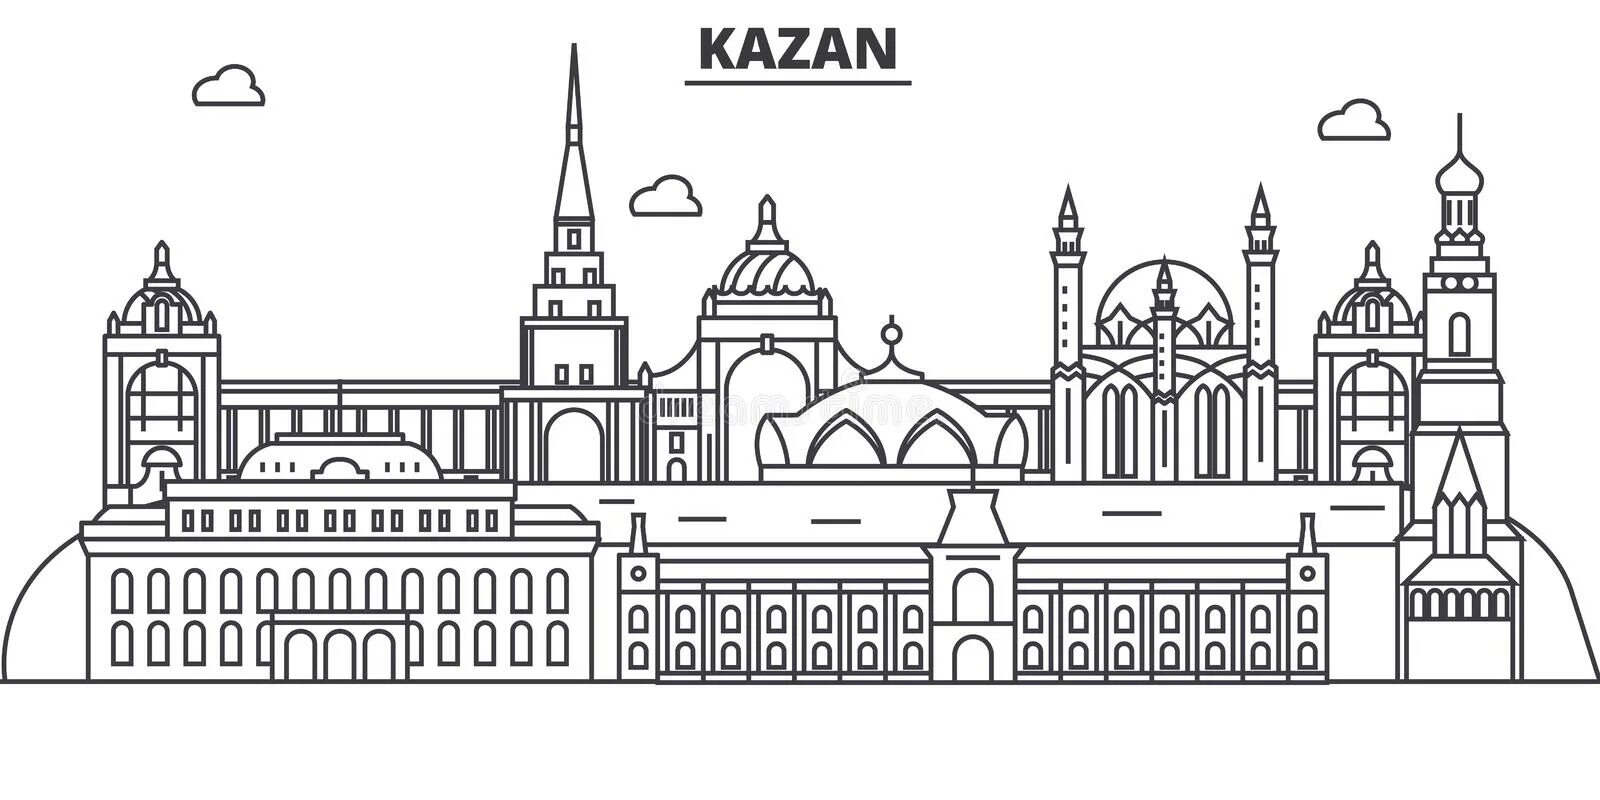 Wonderful center of kazan